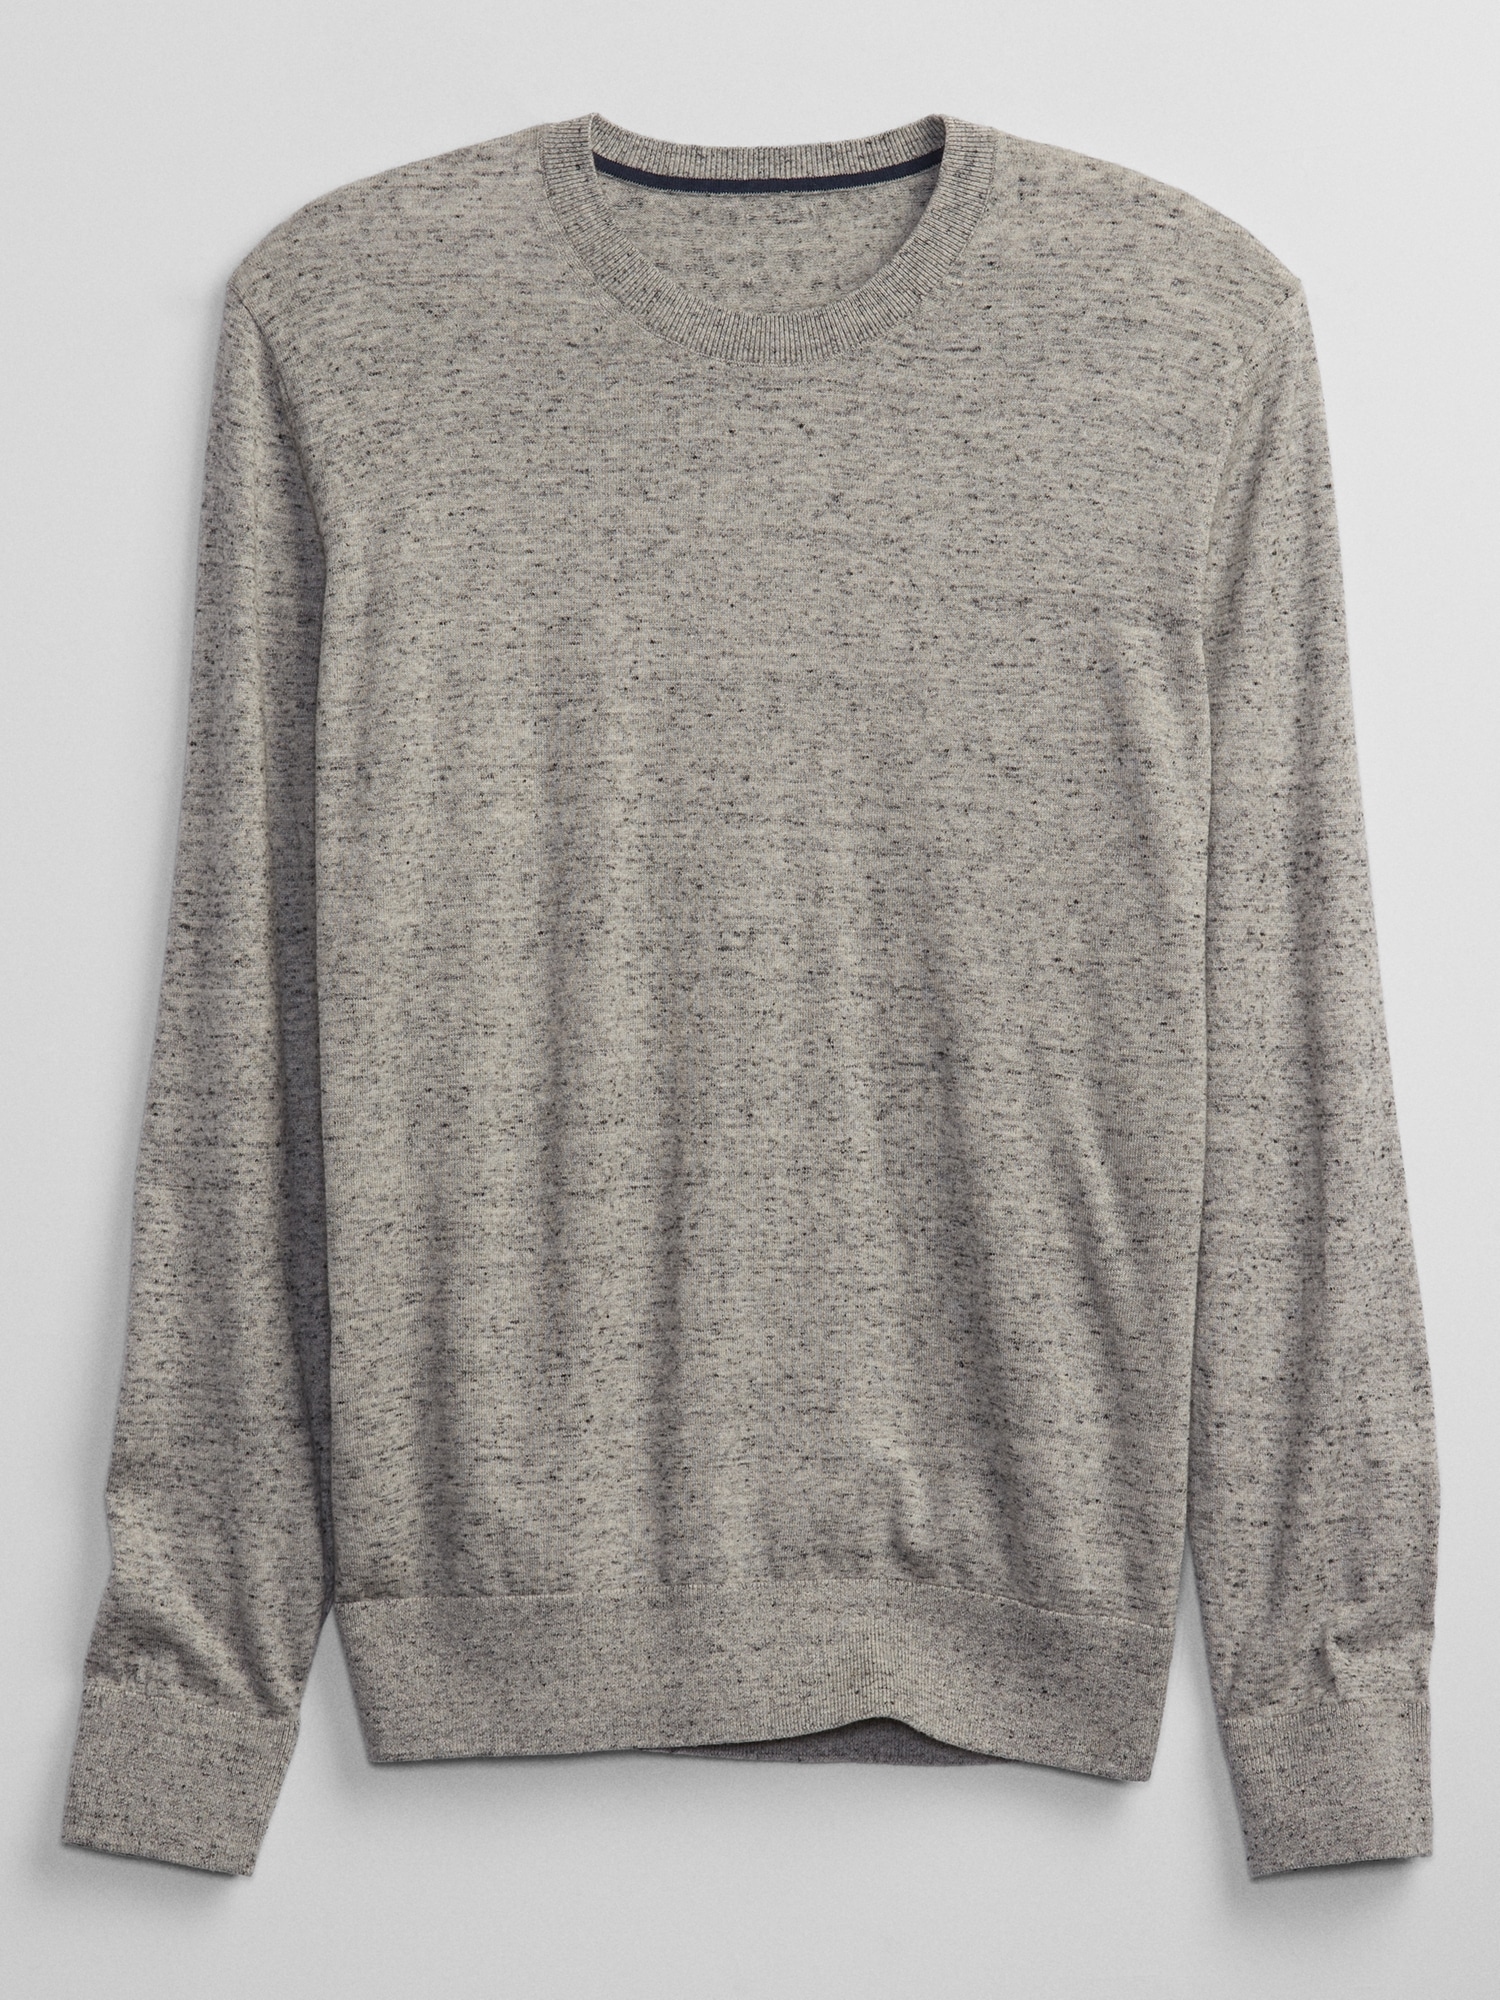 Everyday Crewneck Sweater | Gap Factory